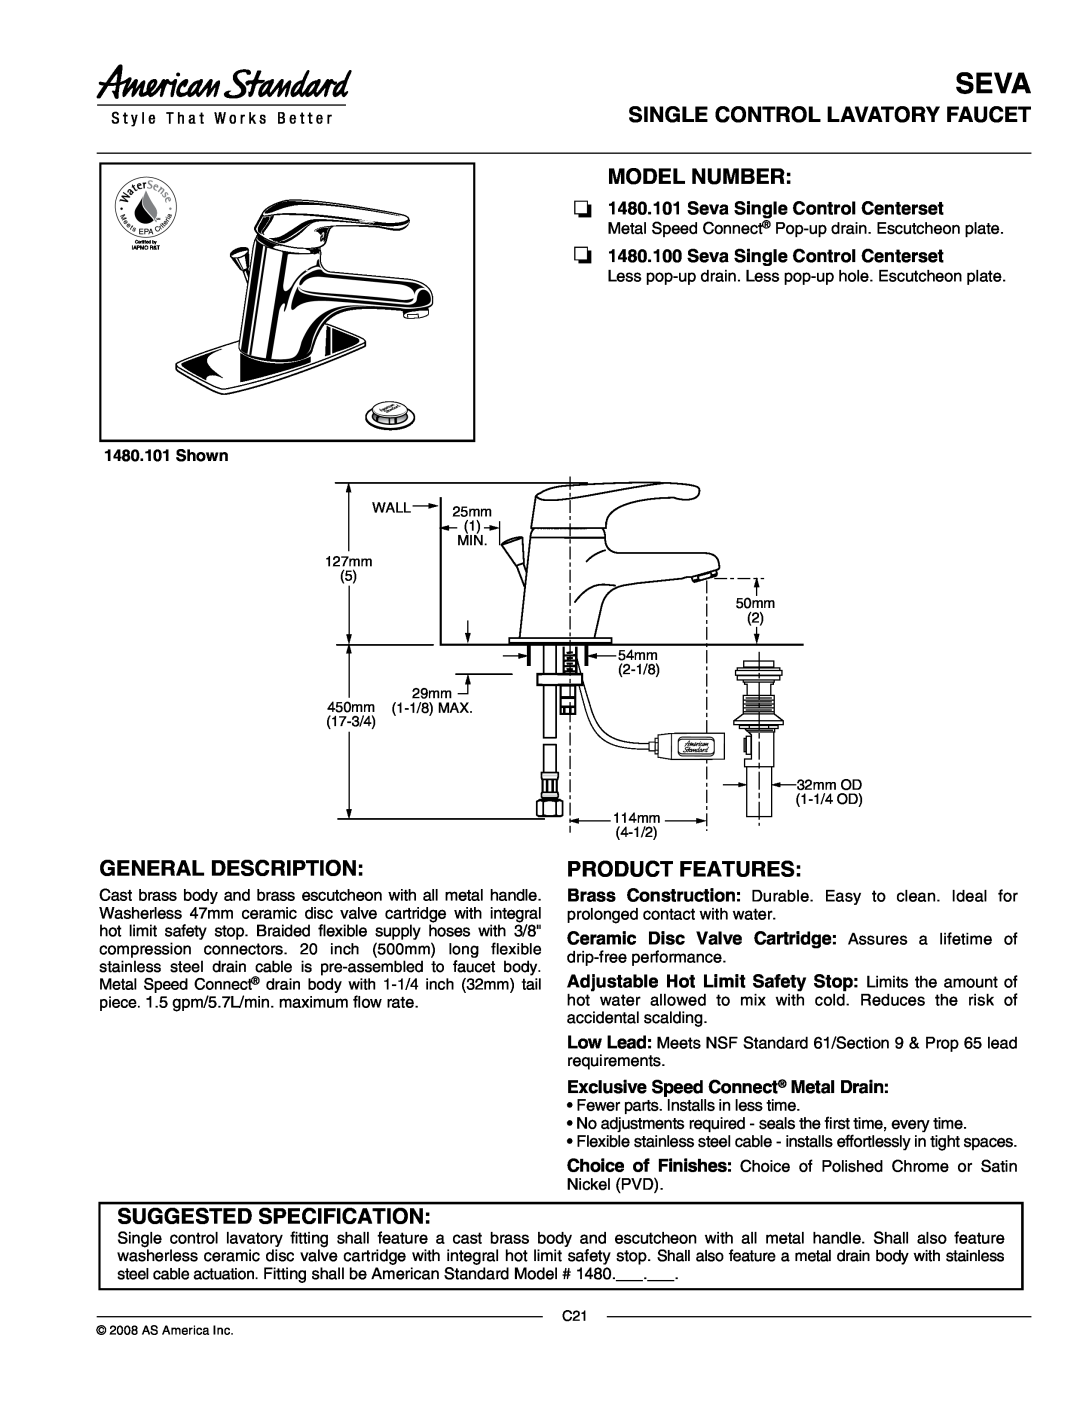 American Standard 1480.100 specifications Seva, Single Control Lavatory Faucet Model Number, General Description, Shown 